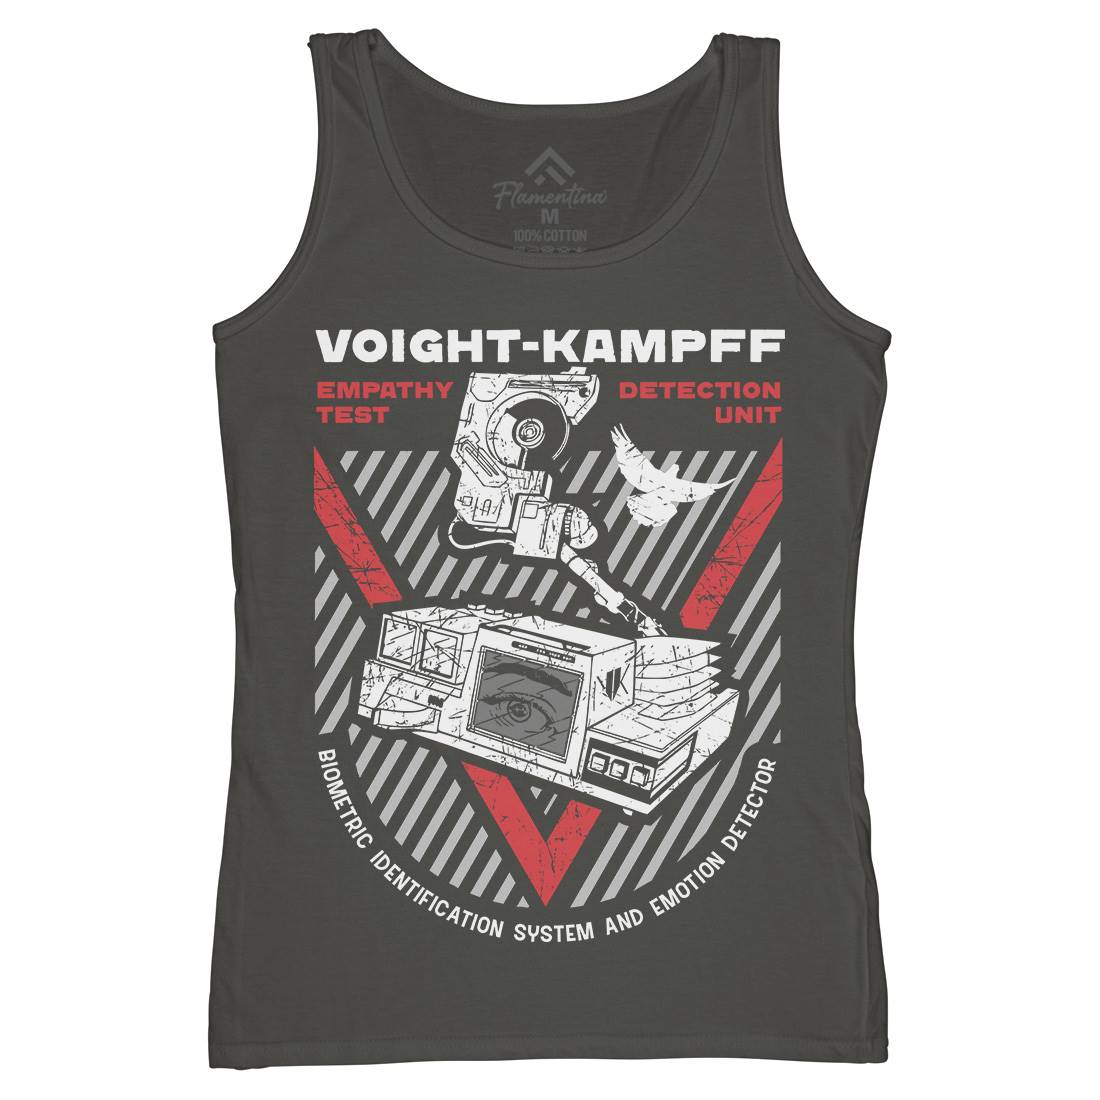 Voight Kampff Womens Organic Tank Top Vest Space D175